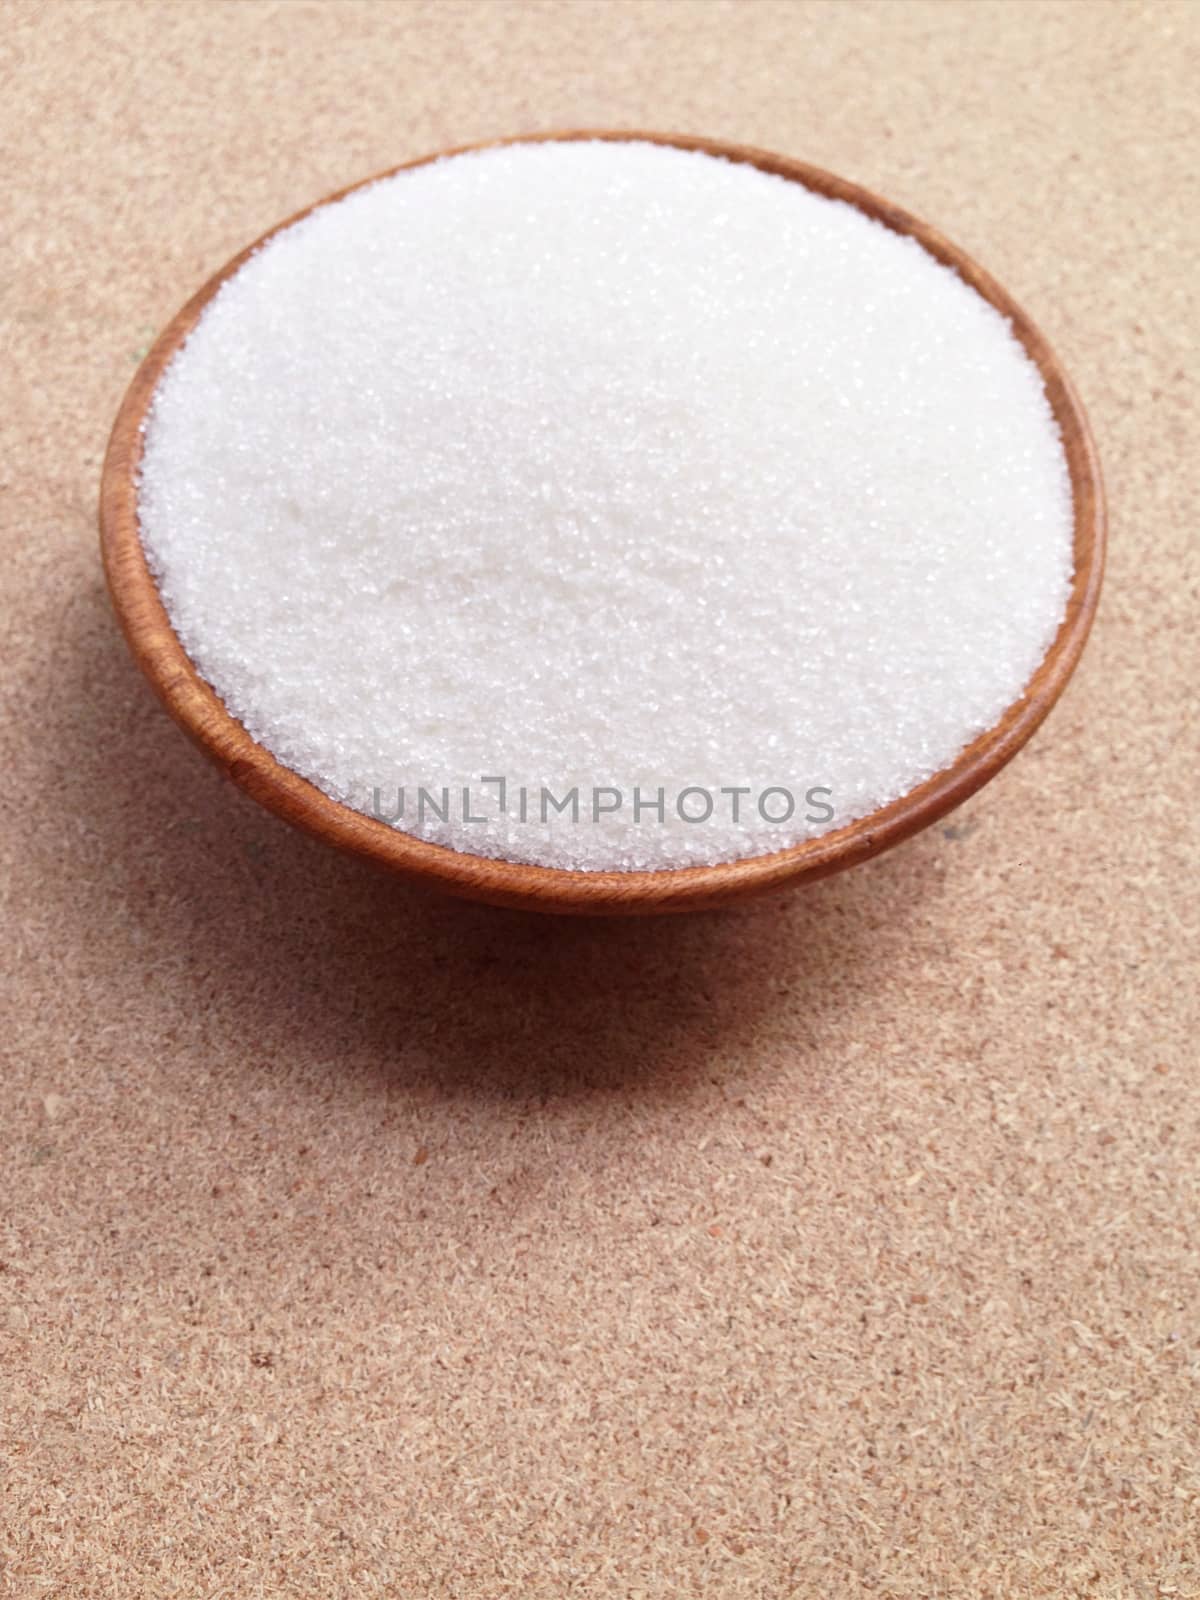 Bowl of sugar on plywood background